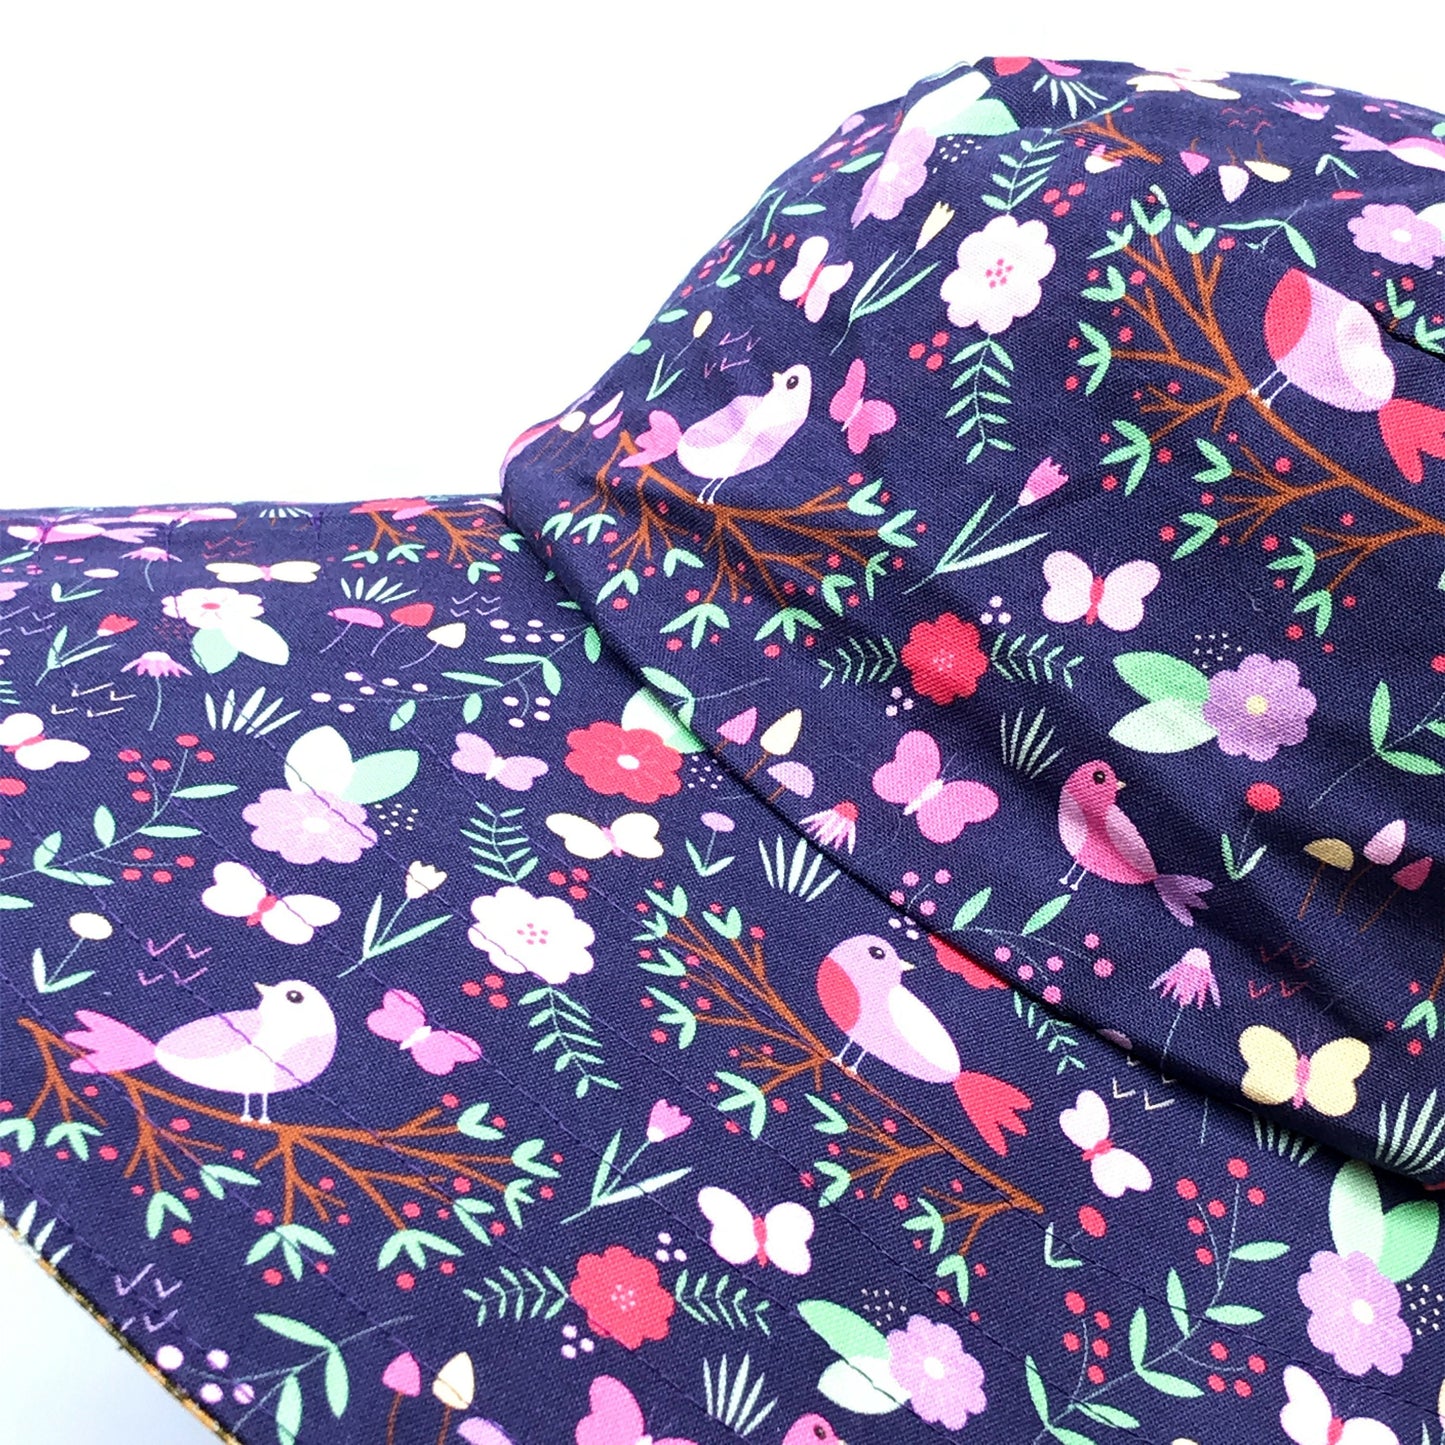 Wide Brim Reversible Sun Hat, Ladies / Girls sizes avail - purple birds